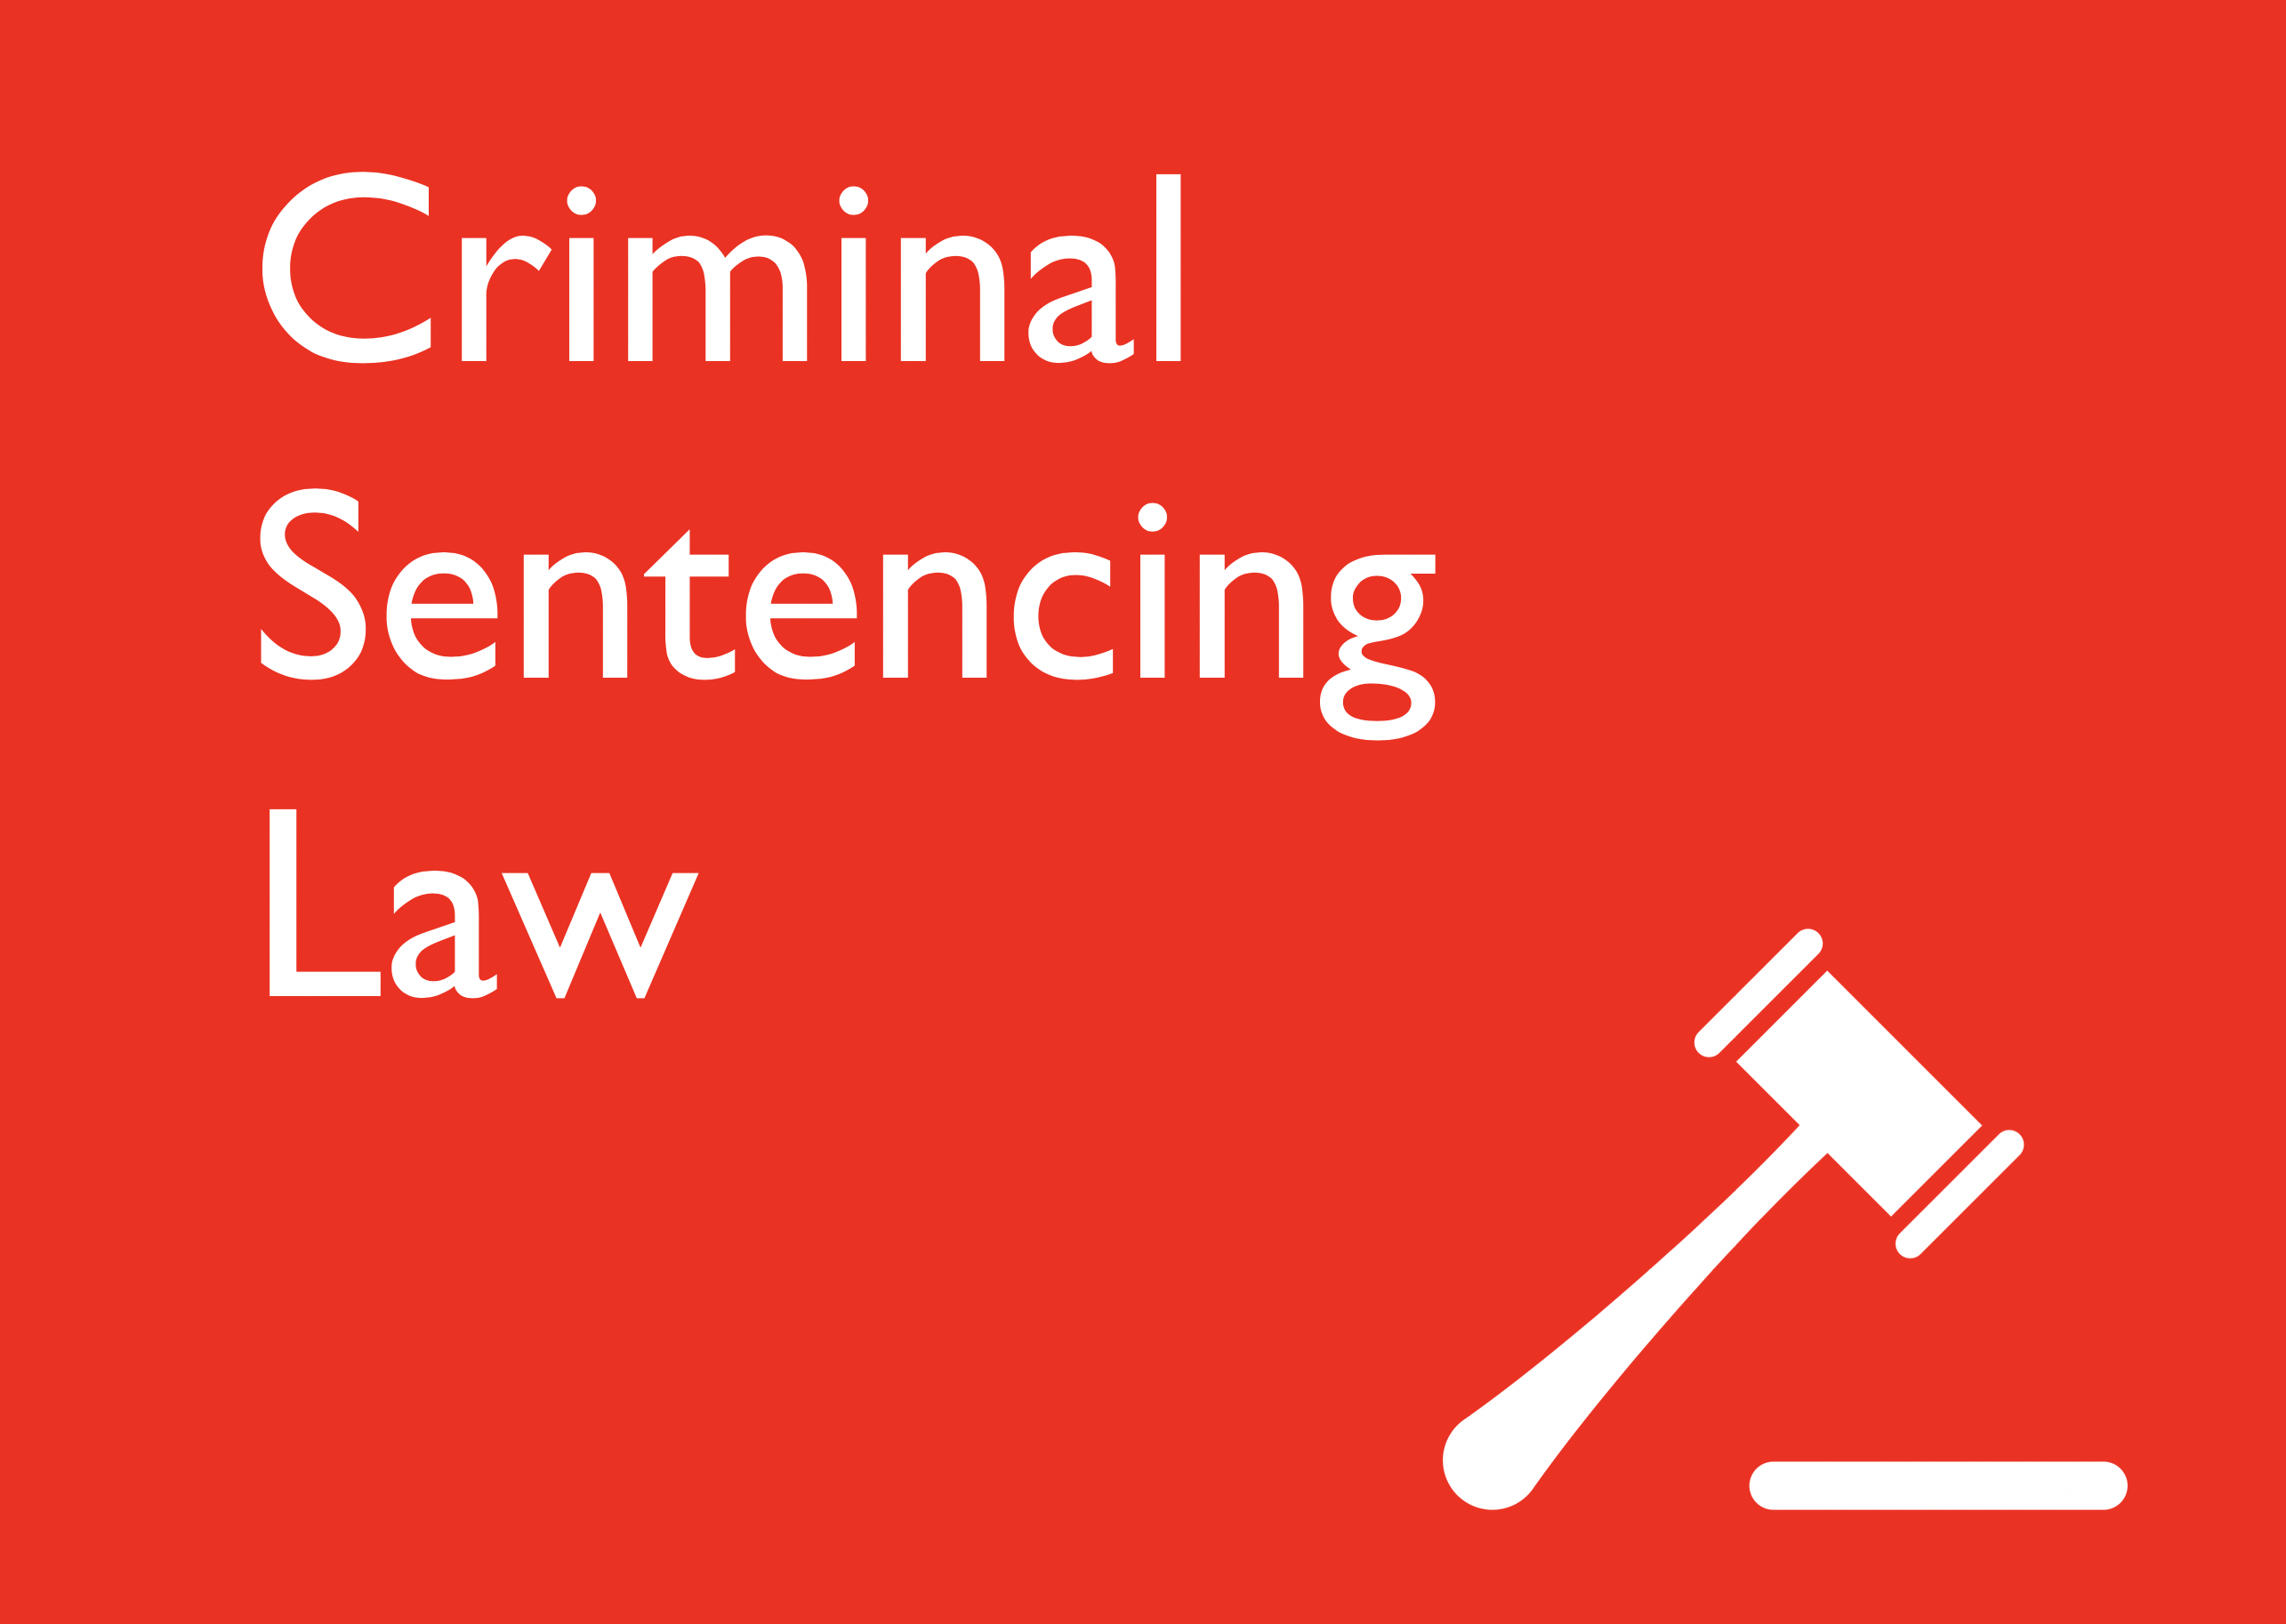 Criminal Sentencing Law